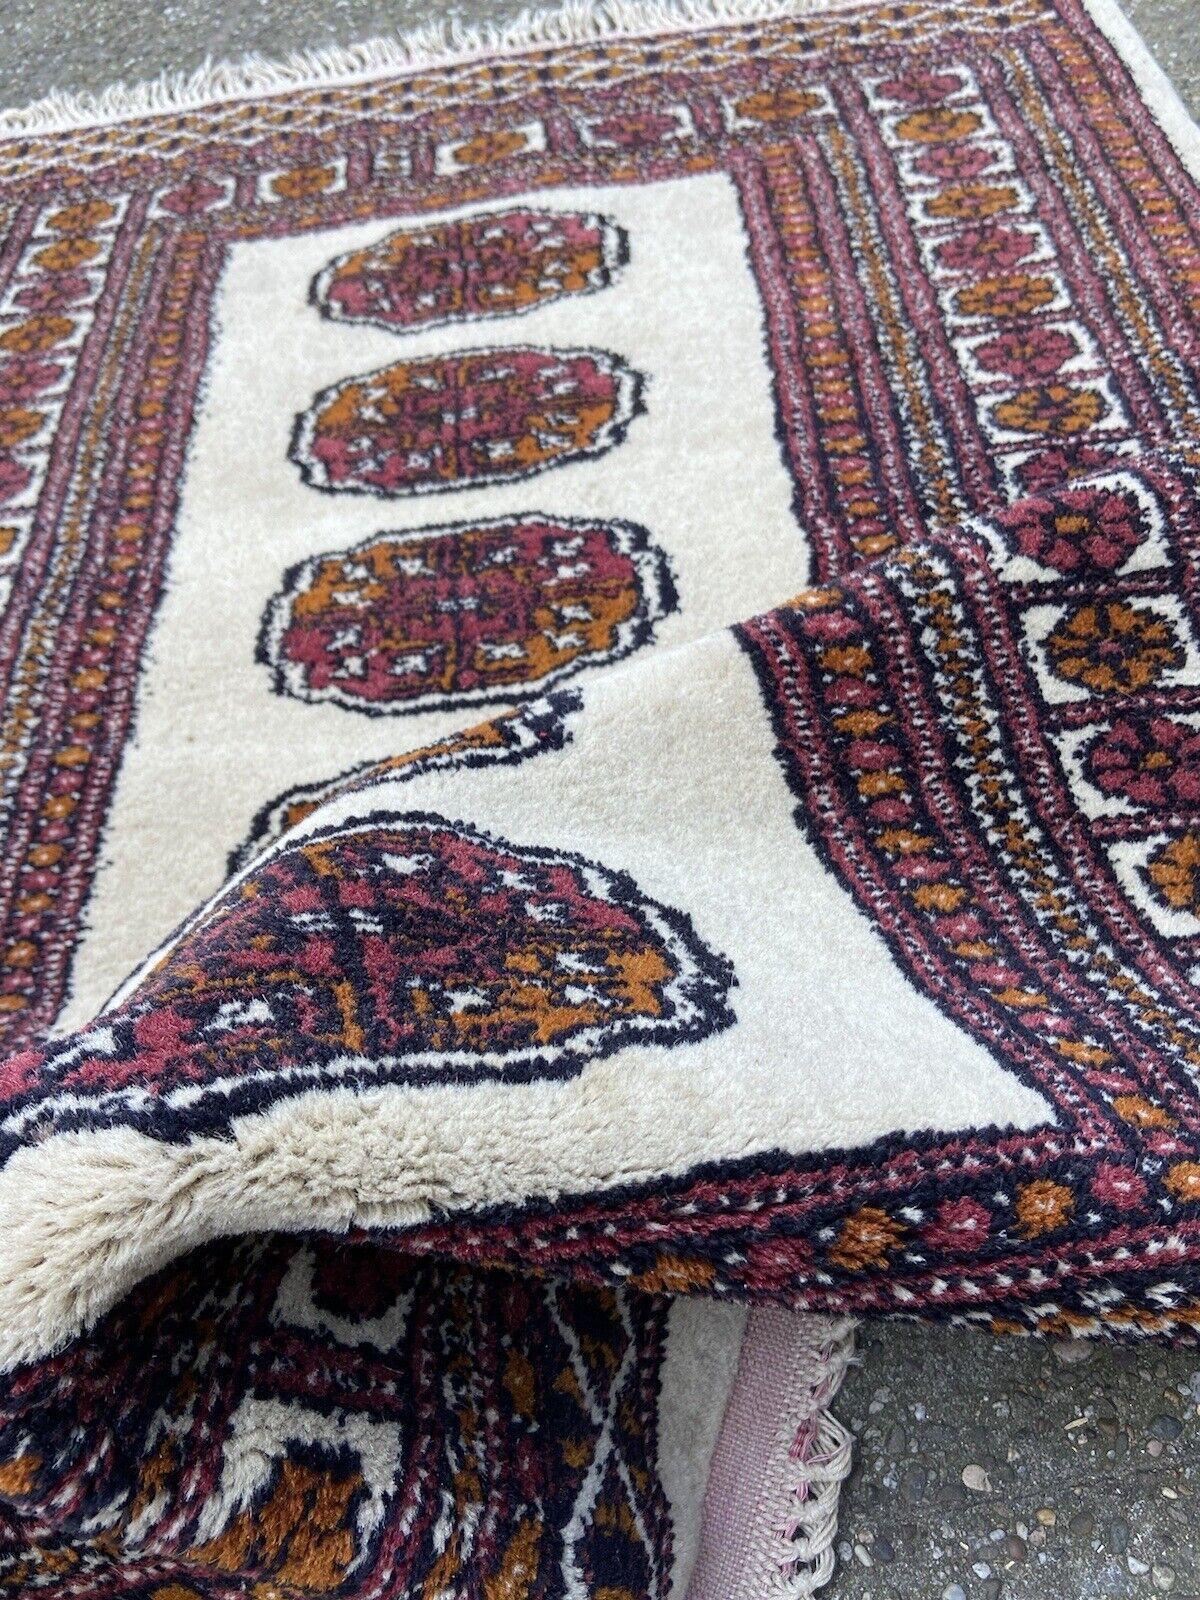 Wool Handmade Vintage Uzbek Bukhara Rug 2.7' x 4.3', 1960s - 1S09 For Sale